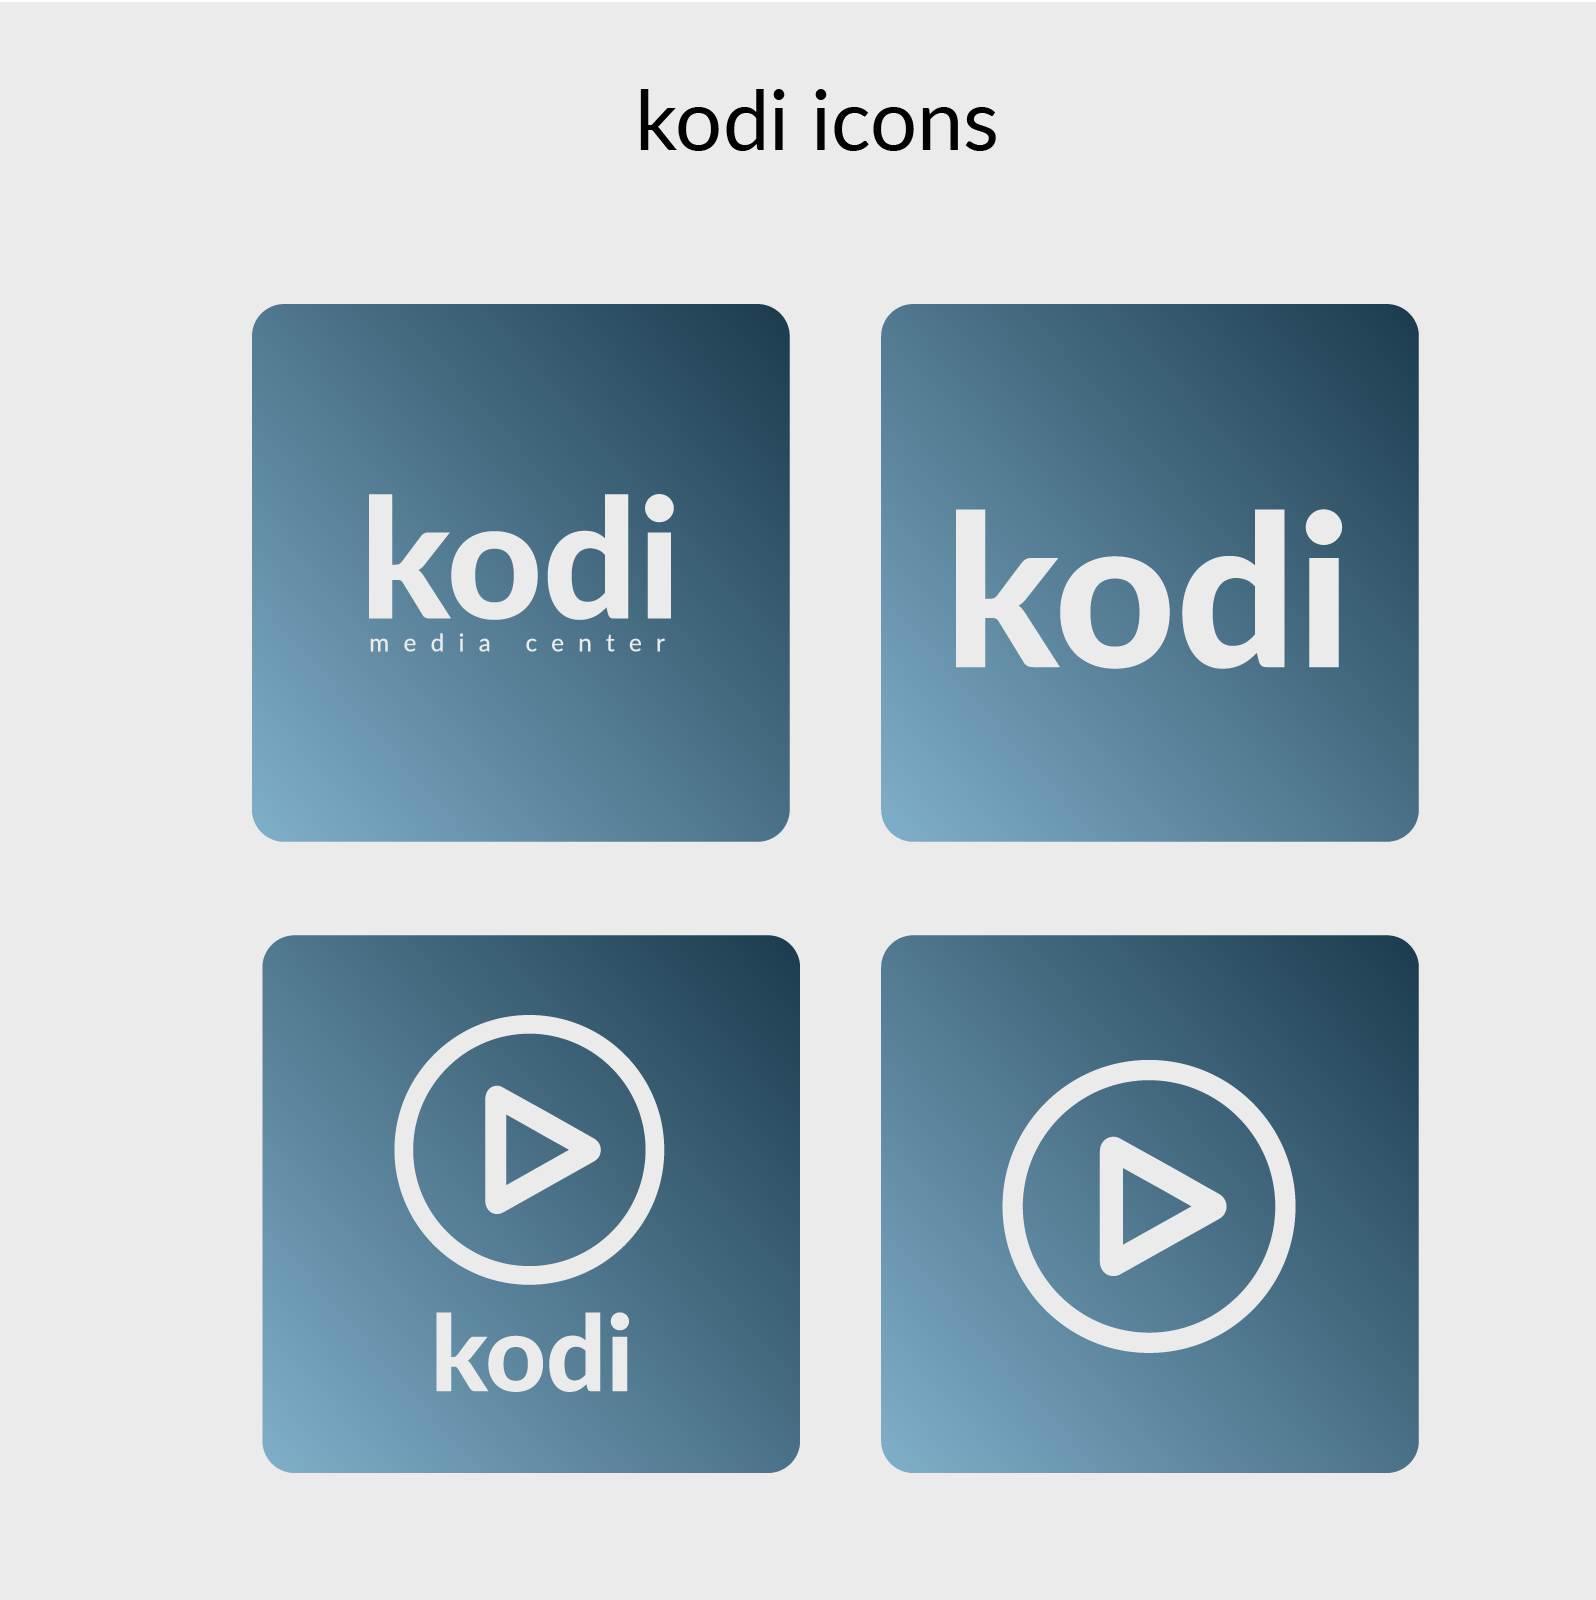 kodi icon download - iConvert Icons